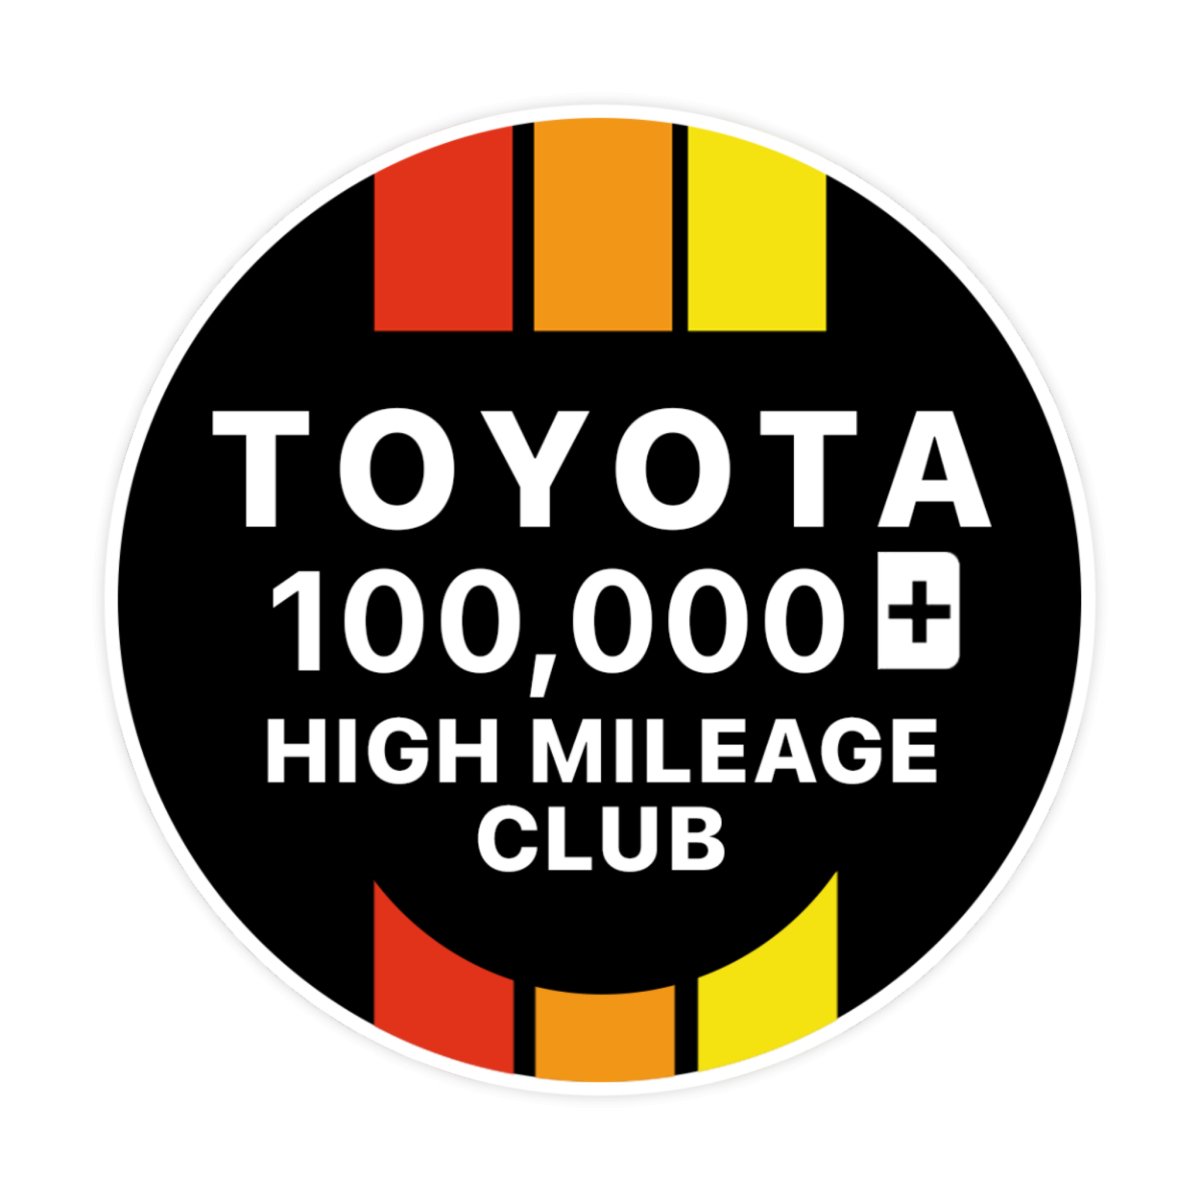 Toyota 500k High Mileage Celebration Decal Sticker - stickerbullToyota 500k High Mileage Celebration Decal StickerRetail StickerstickerbullstickerbullToyota100k [#112]100k StickerToyota 500k High Mileage Celebration Decal Sticker